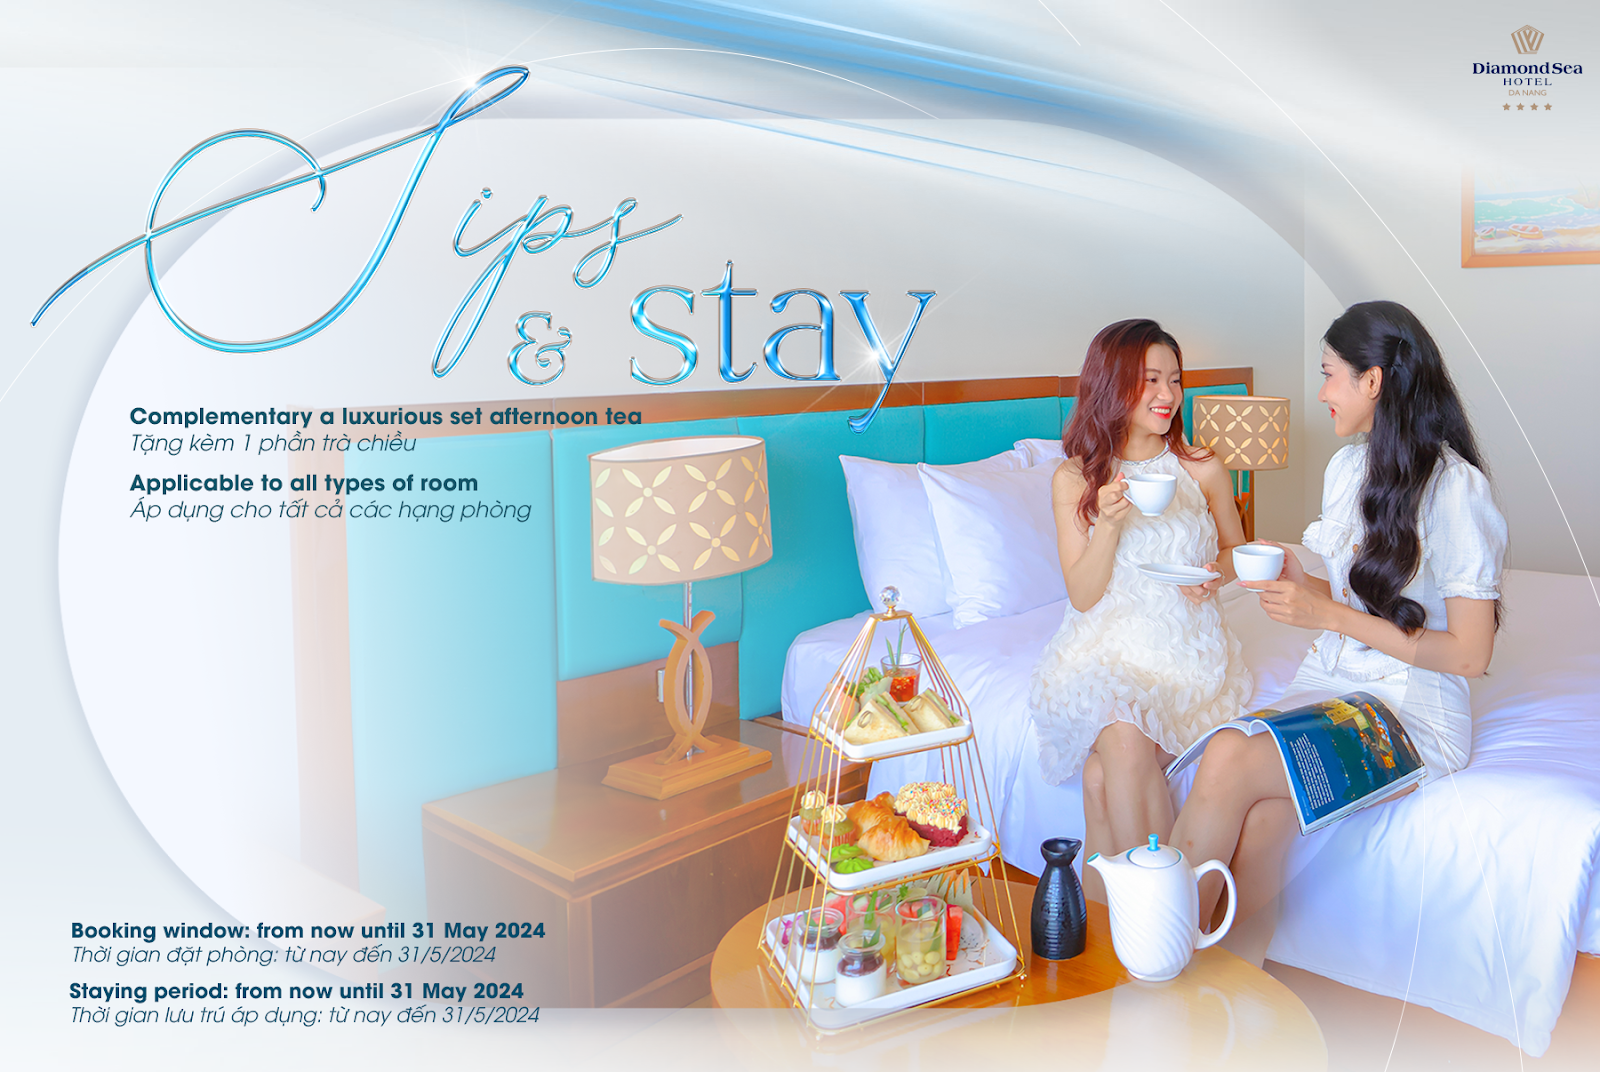 “Sips & Stay” of Diamond Sea Da Nang Hotel offers free high tea